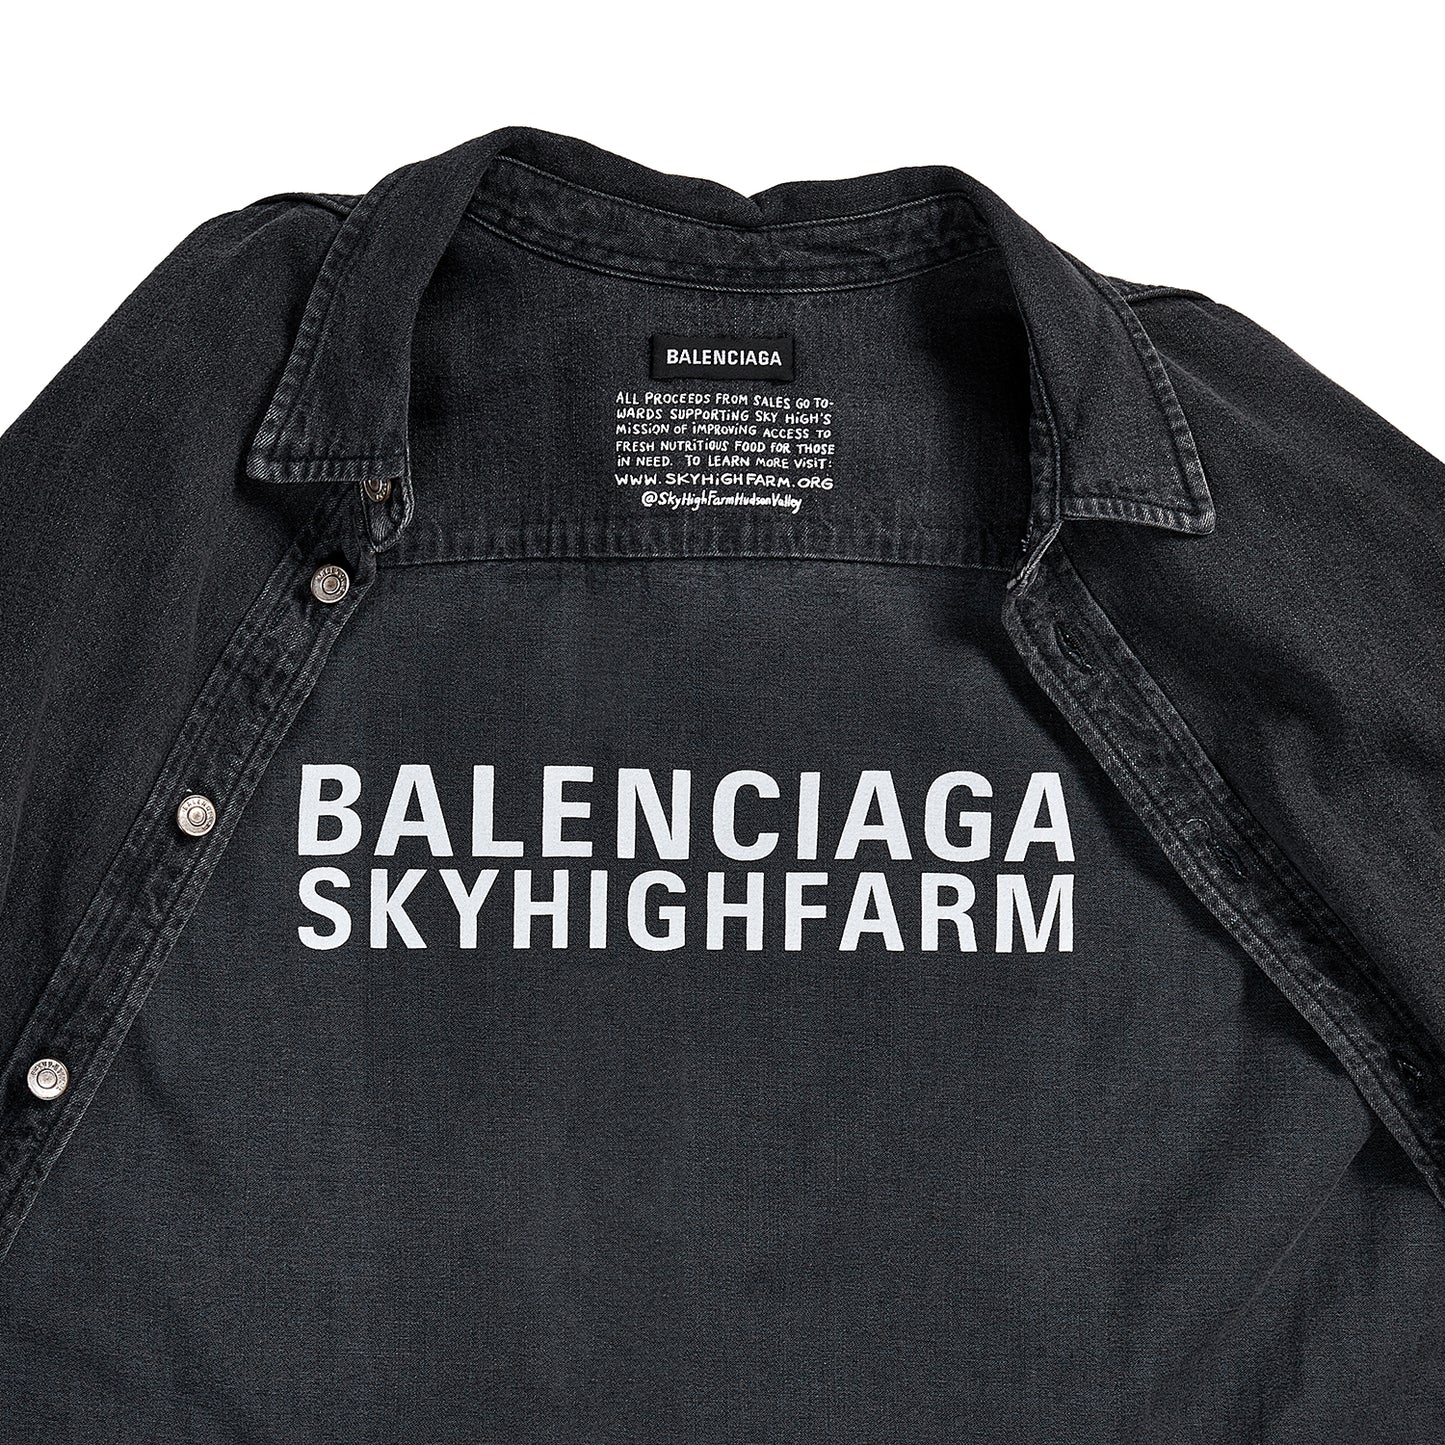 BALENCIAGA X SKY HIGH FARM DENIM SHIRT - LAMB